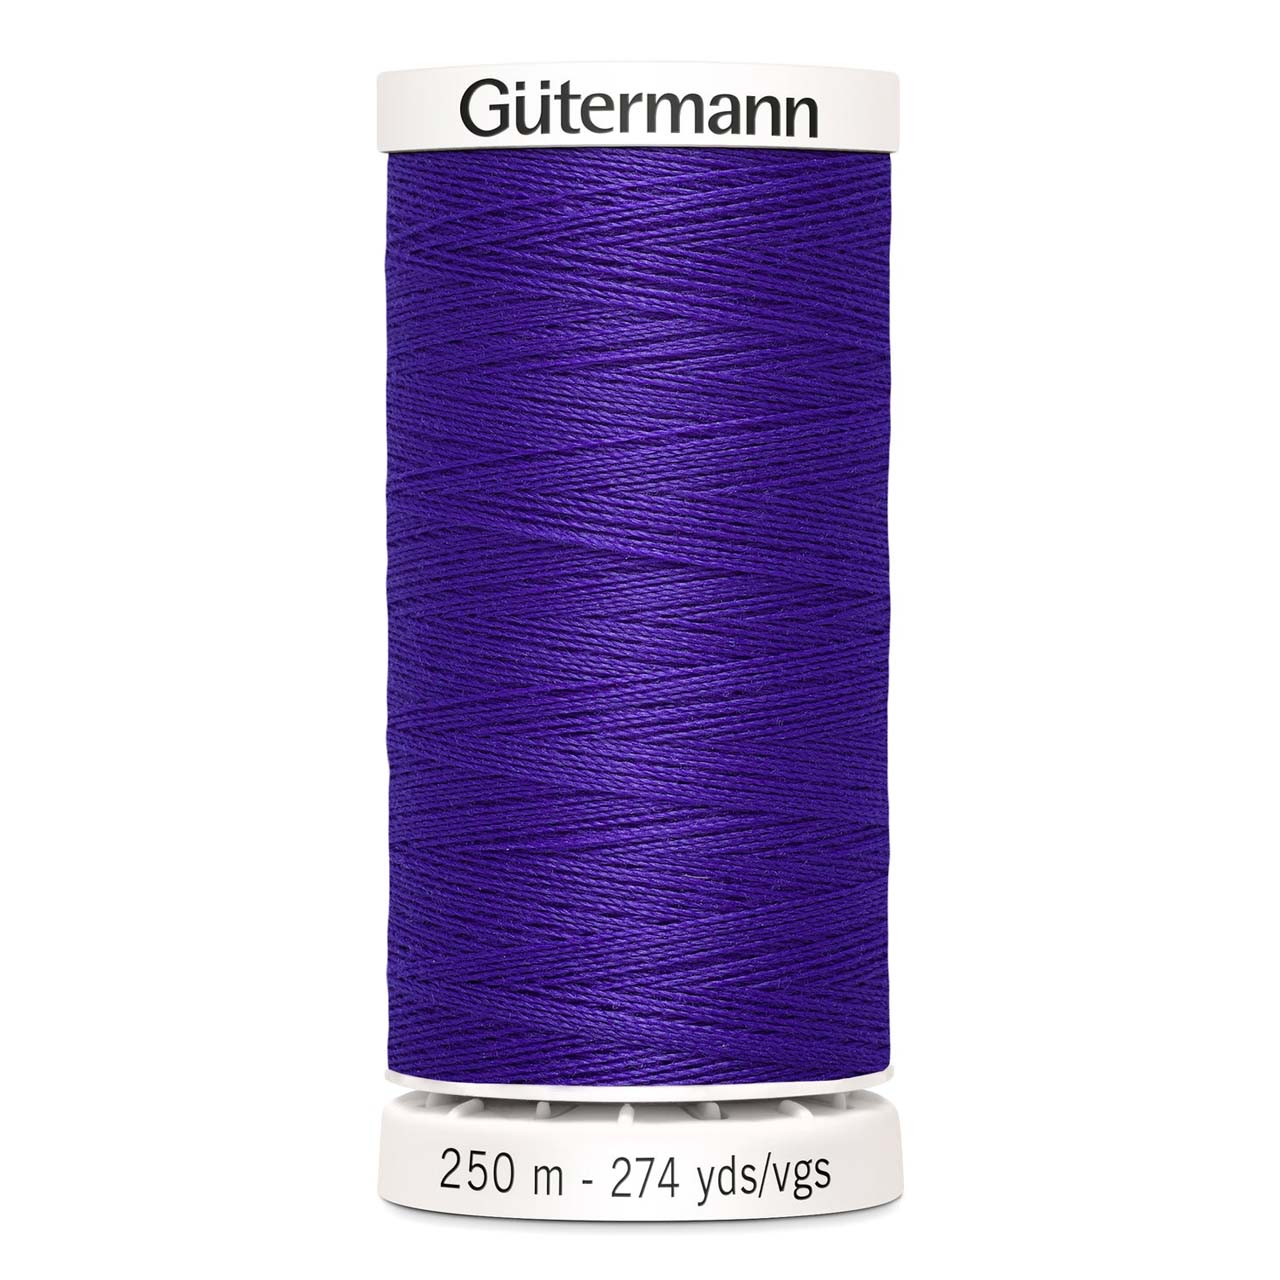 Gutermann thread 810 sewing thread 250 metres